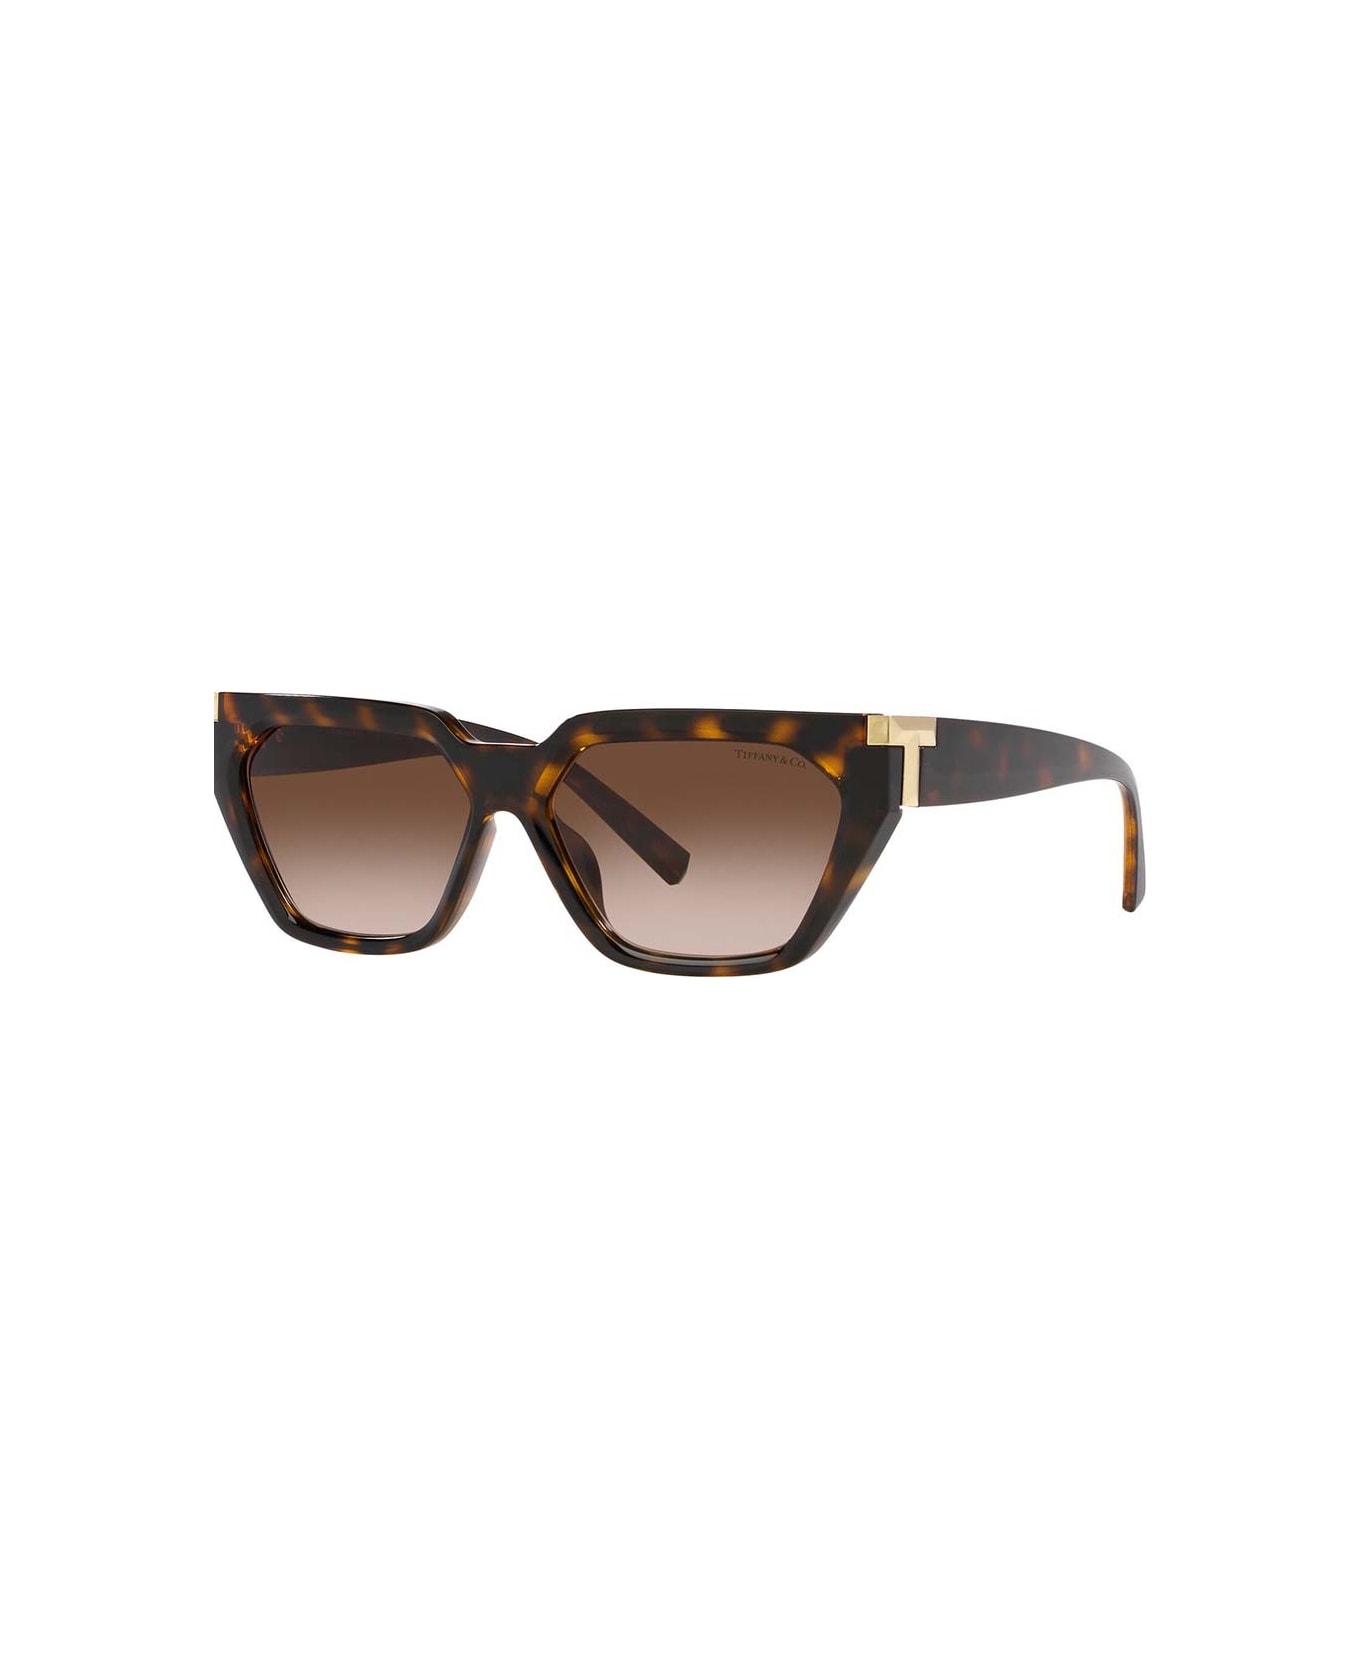 Tiffany & Co. Sunglasses - Marrone/Marrone